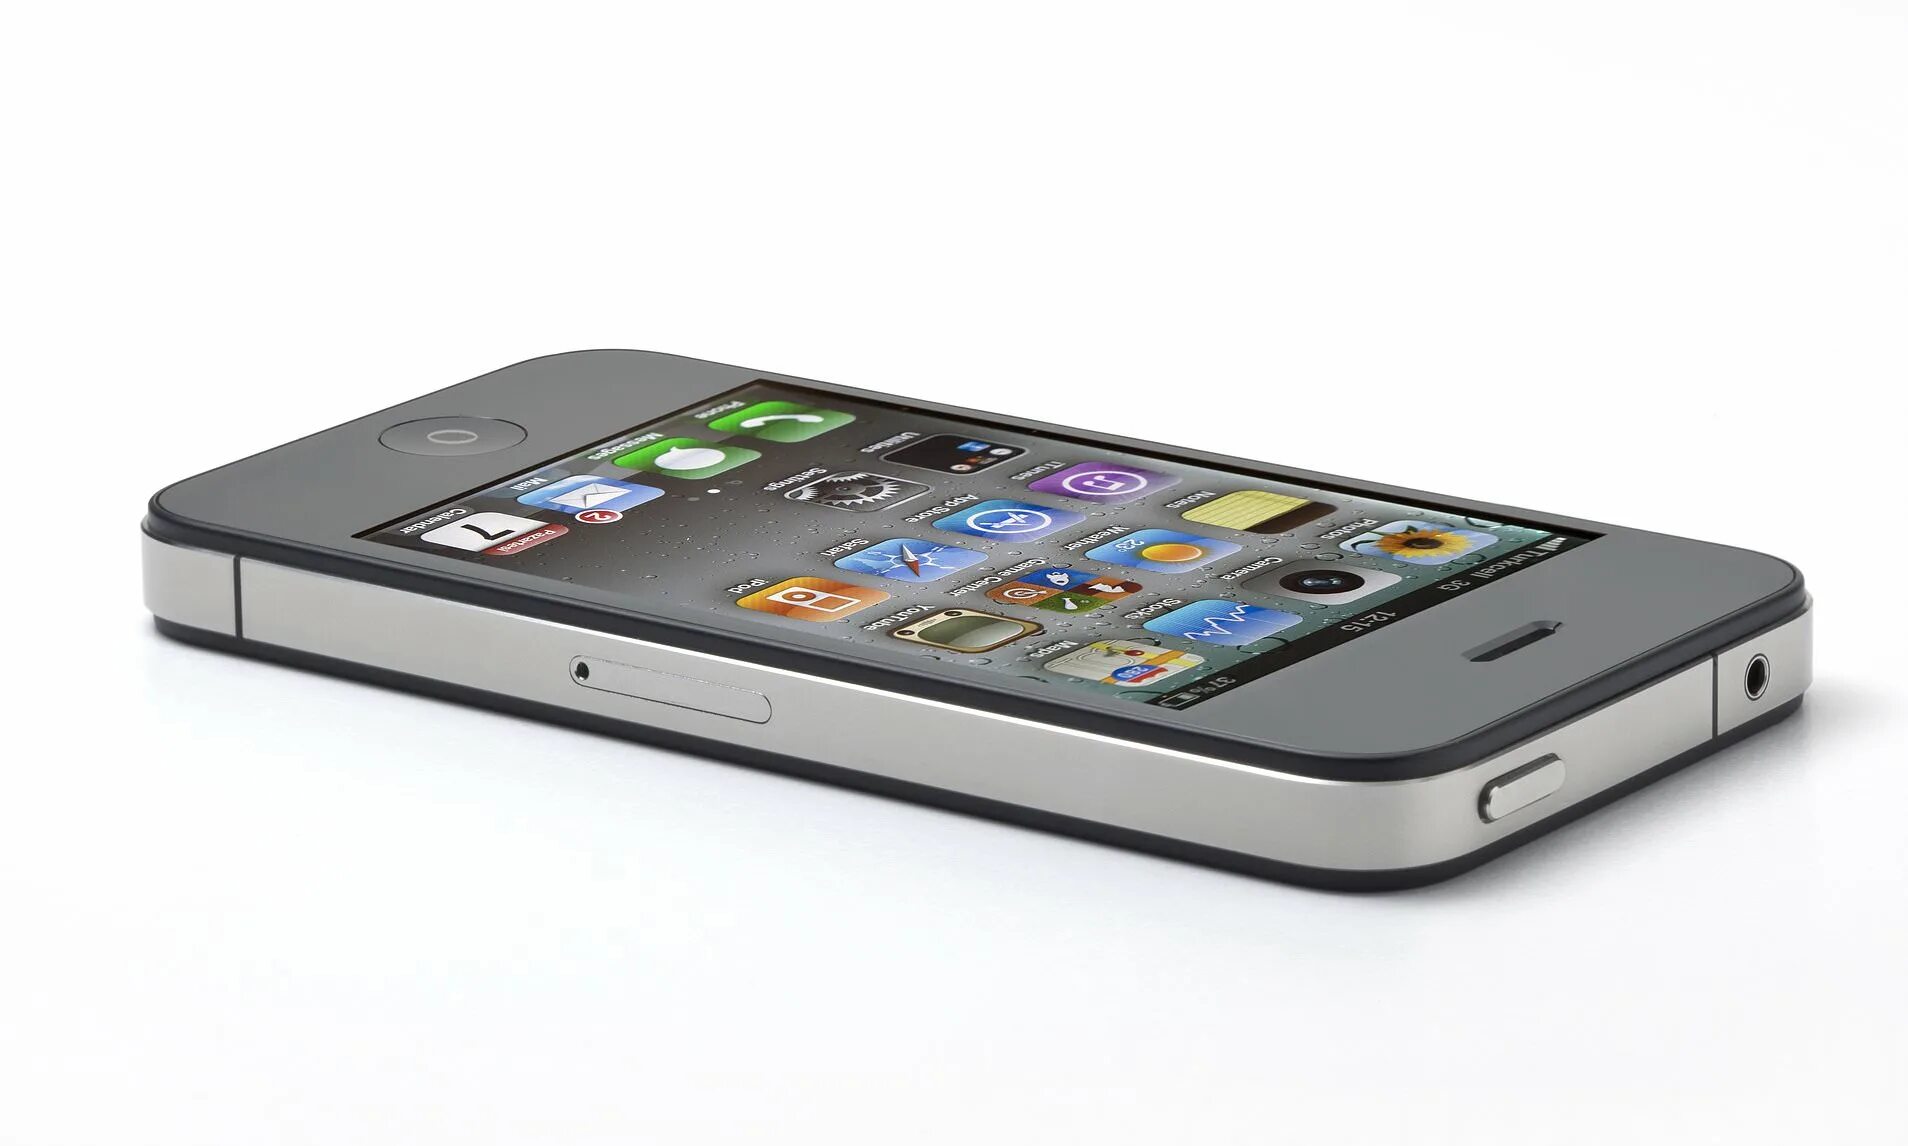 Айфон 4 g. Iphone 5g. Модели iphone 5g. Iphone g. 5g в телефоне айфон.